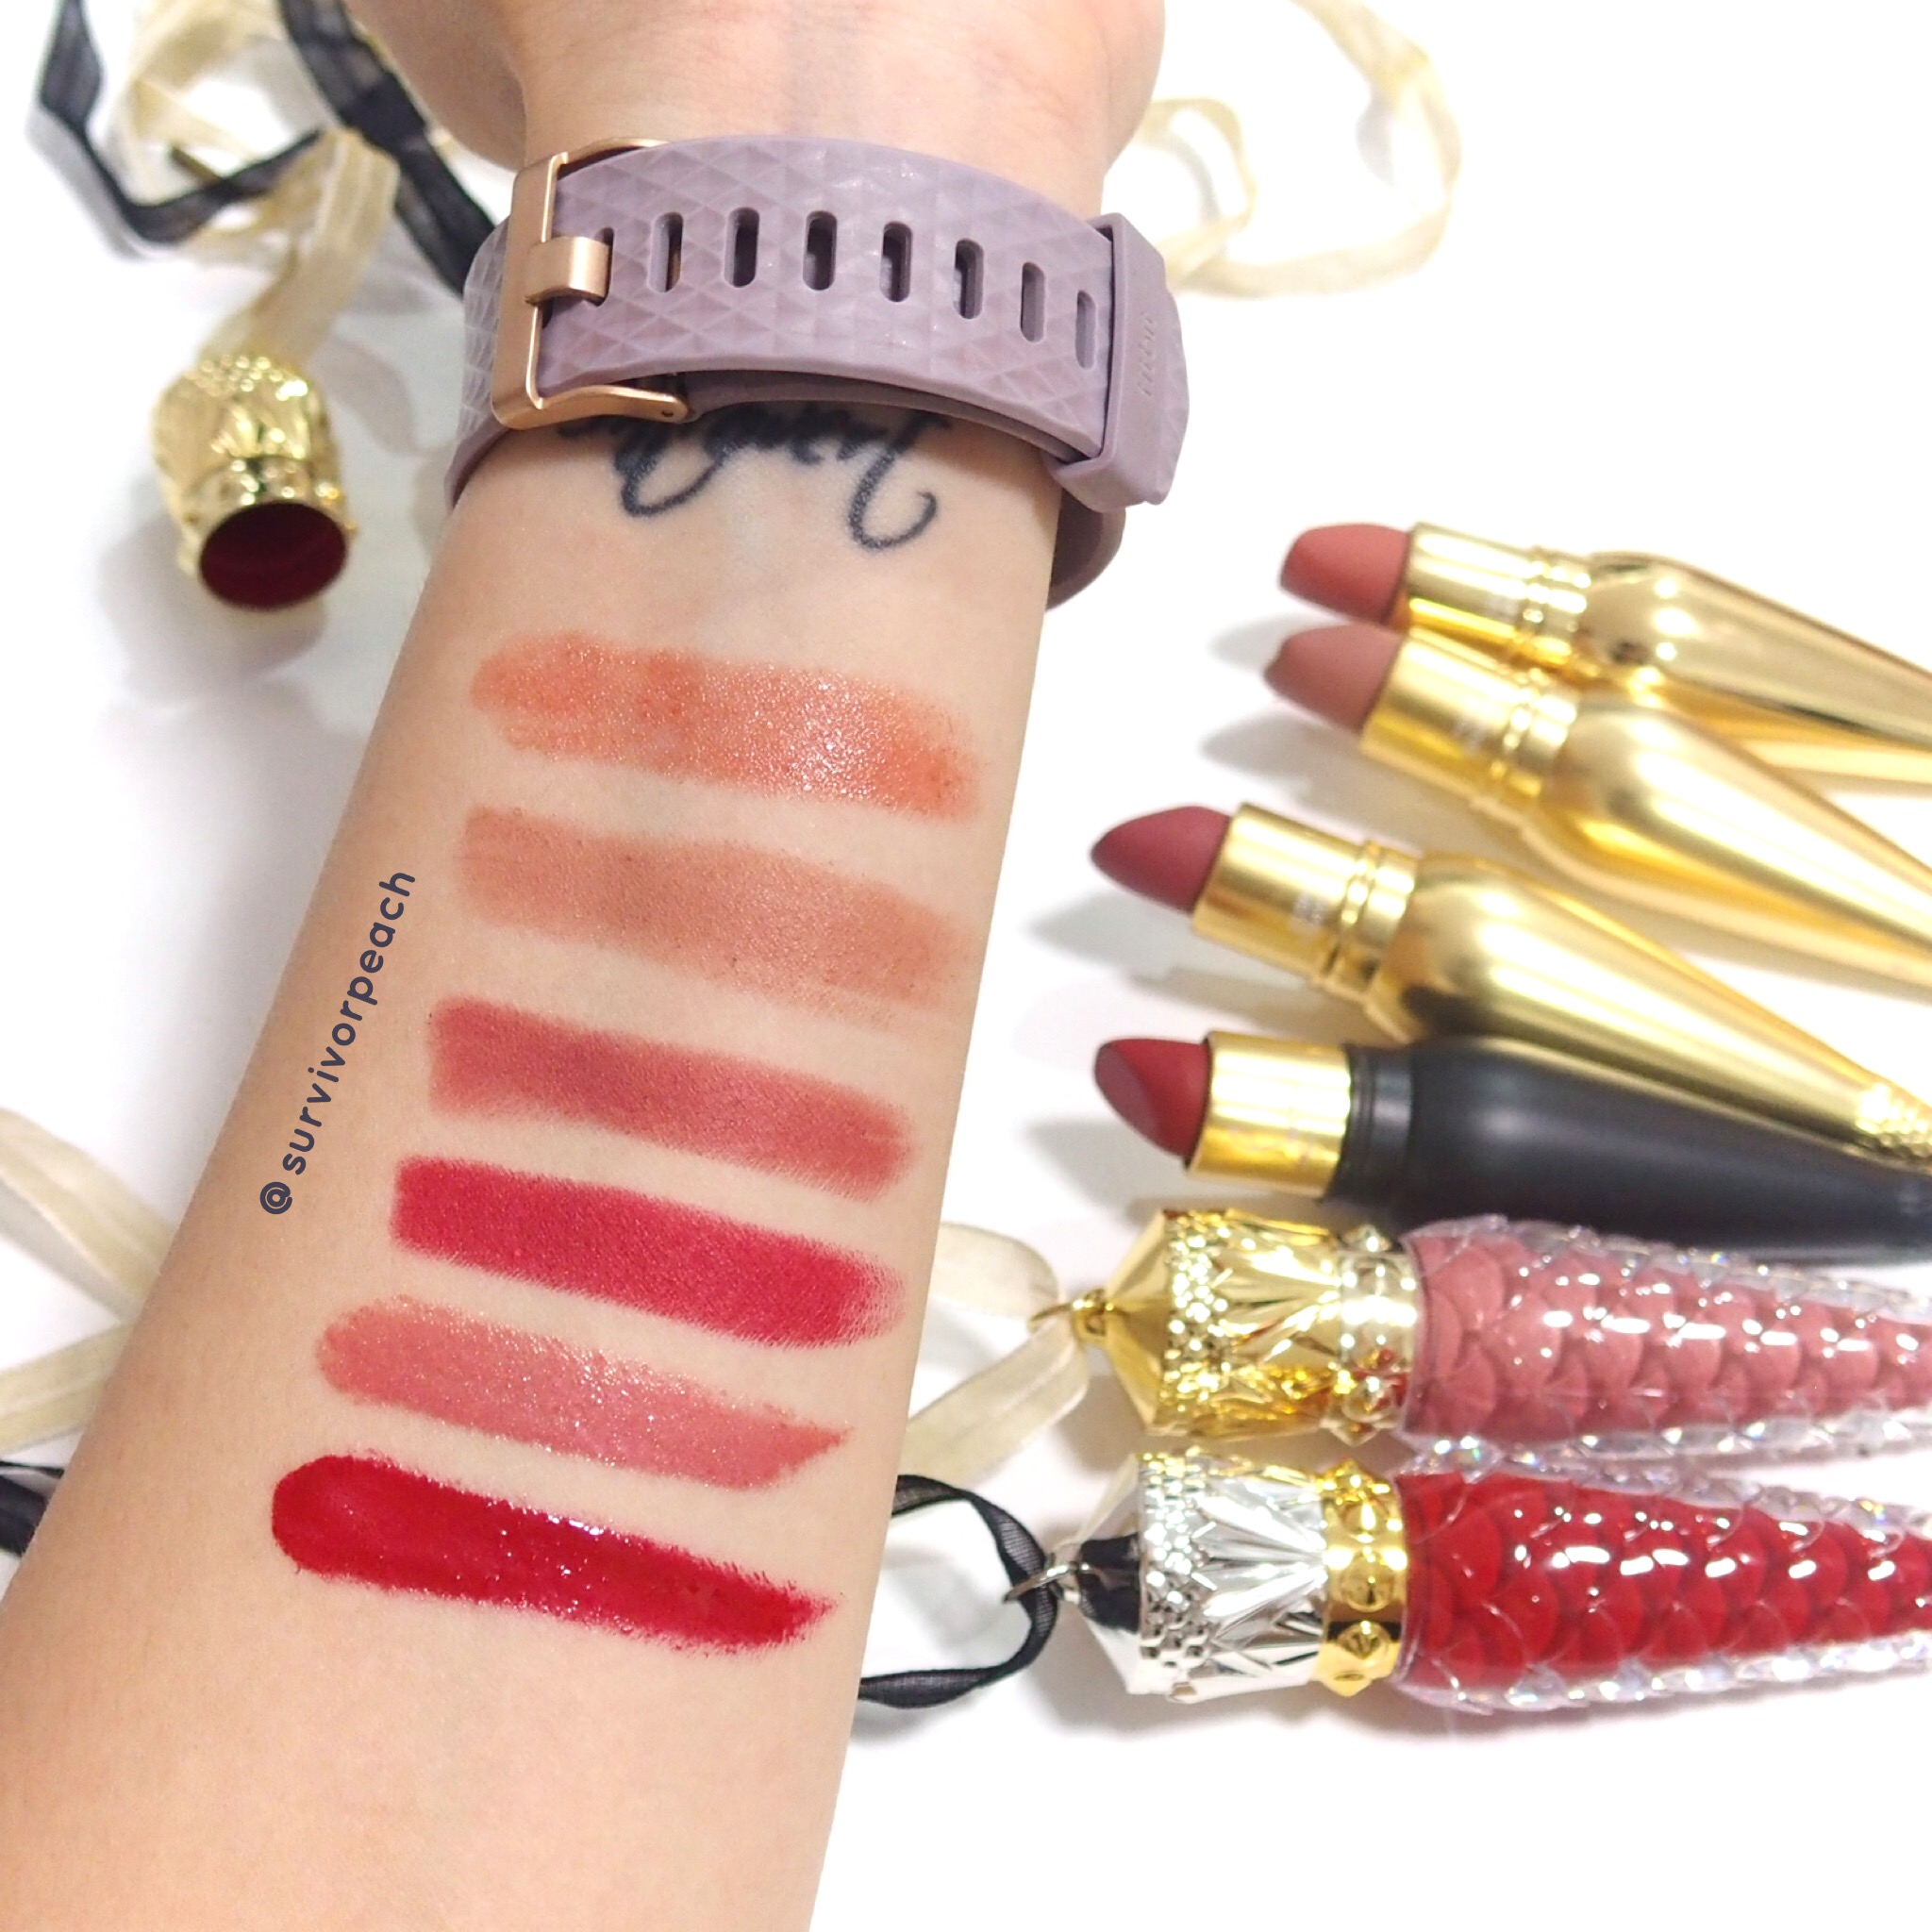 Christian Louboutin's New Lipstick Line Will Awaken You Sexually